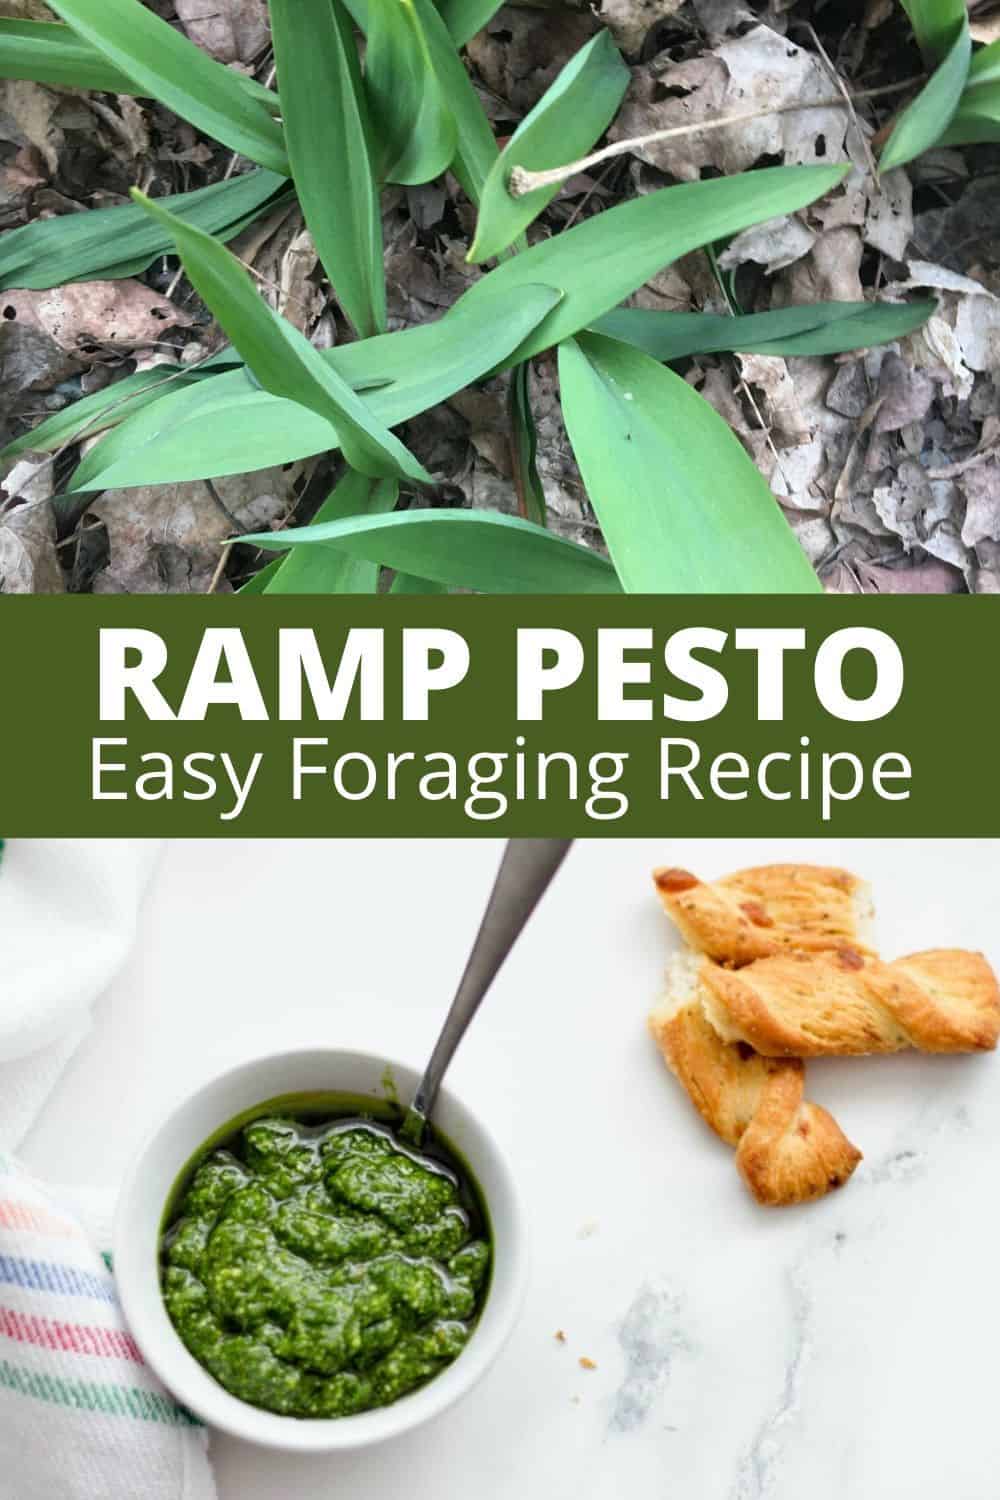 Ramp Pesto Recipe and Freezing Tips for Storage